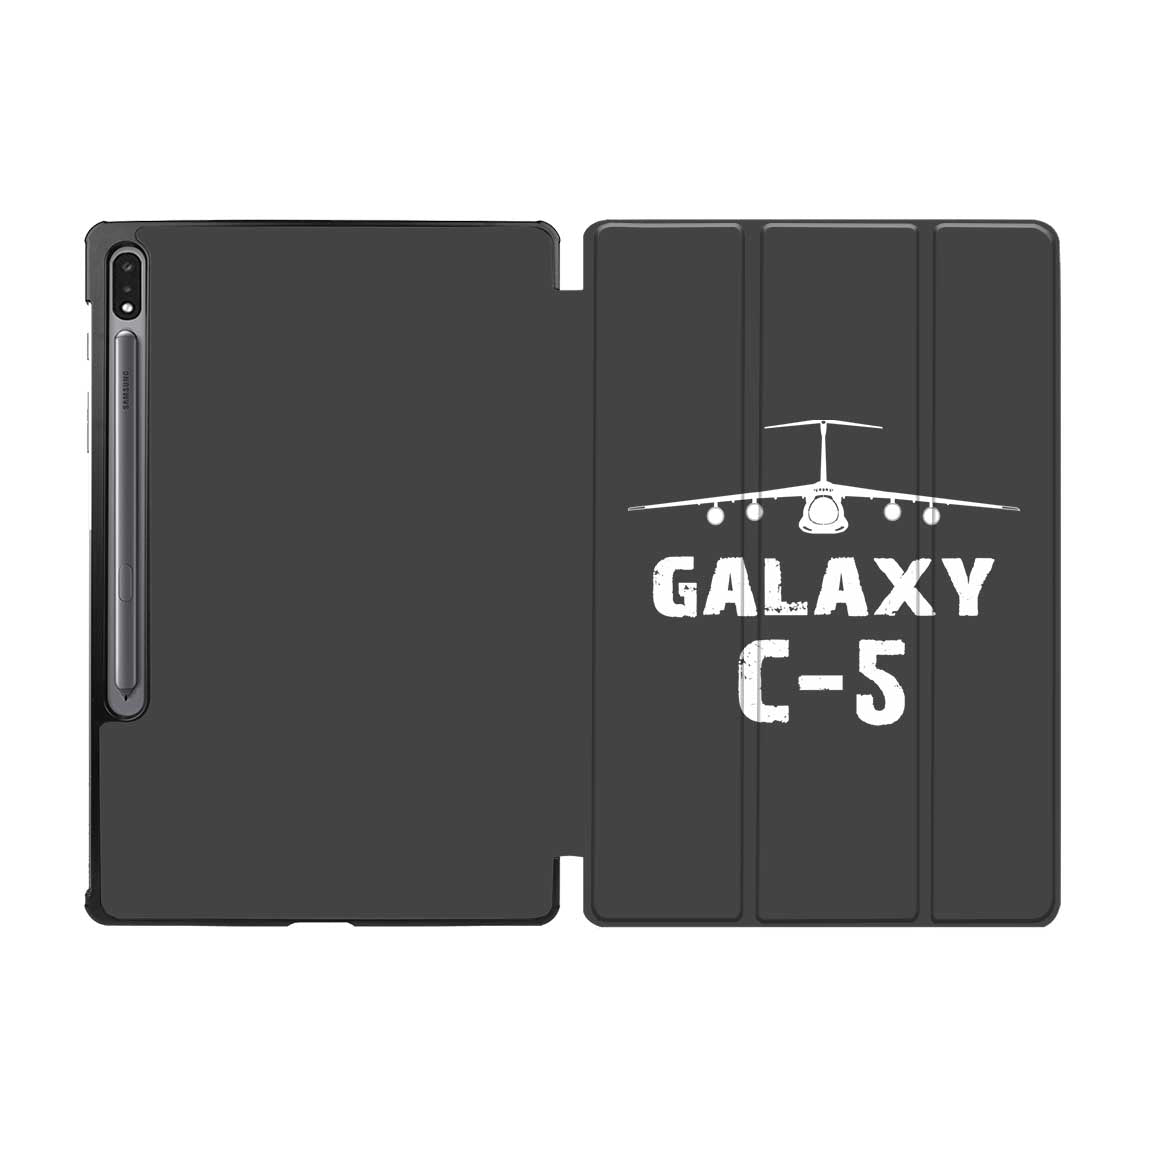 Galaxy C-5 & Plane Designed Samsung Tablet Cases